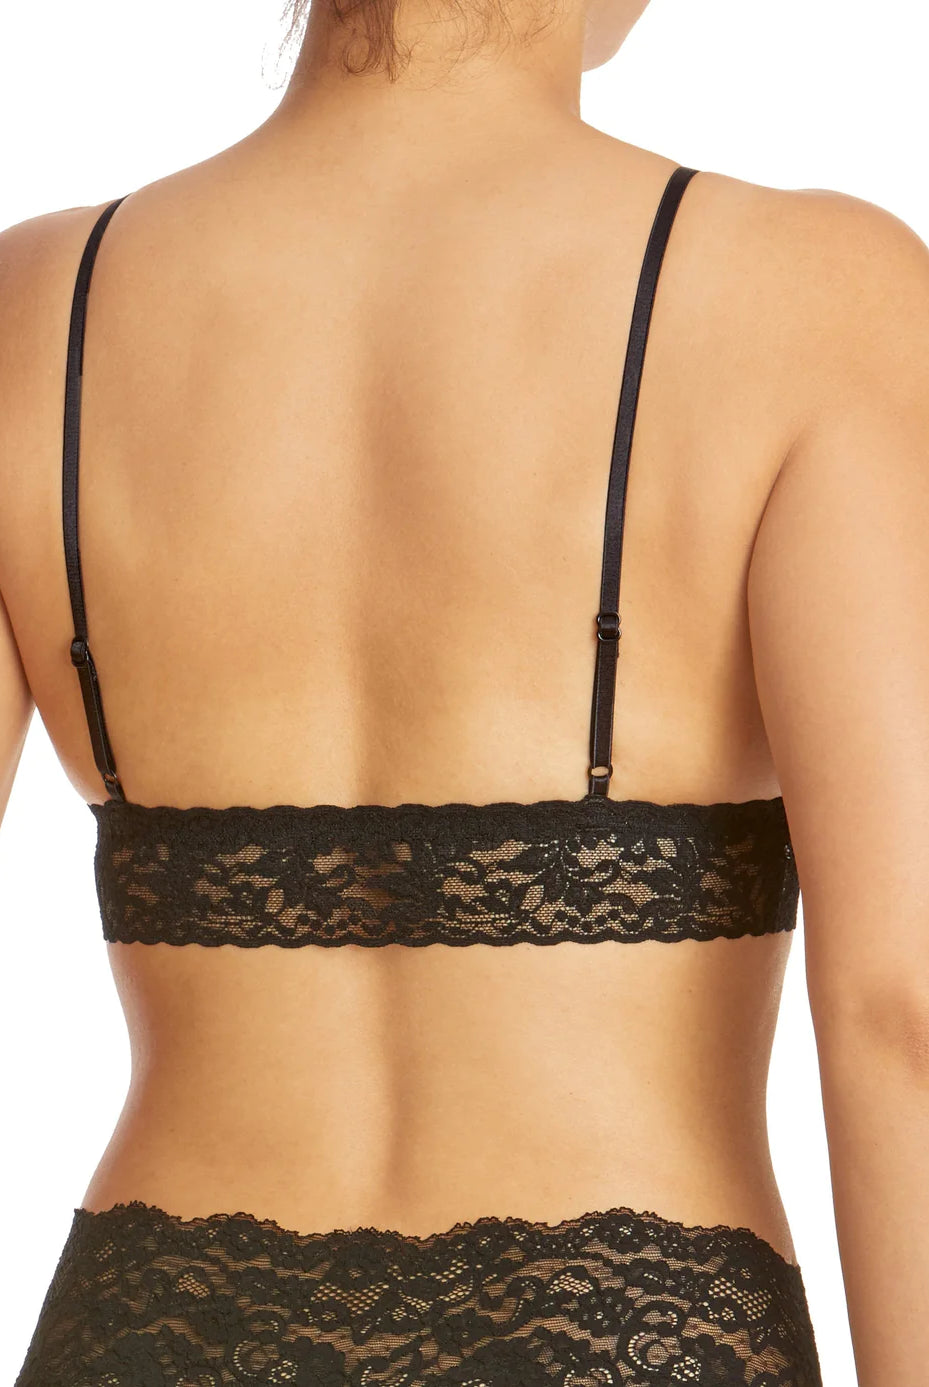 Signature Lace Padded Triangle Bralette - Black - Flirt! Luxe Lingerie & Sleepwear